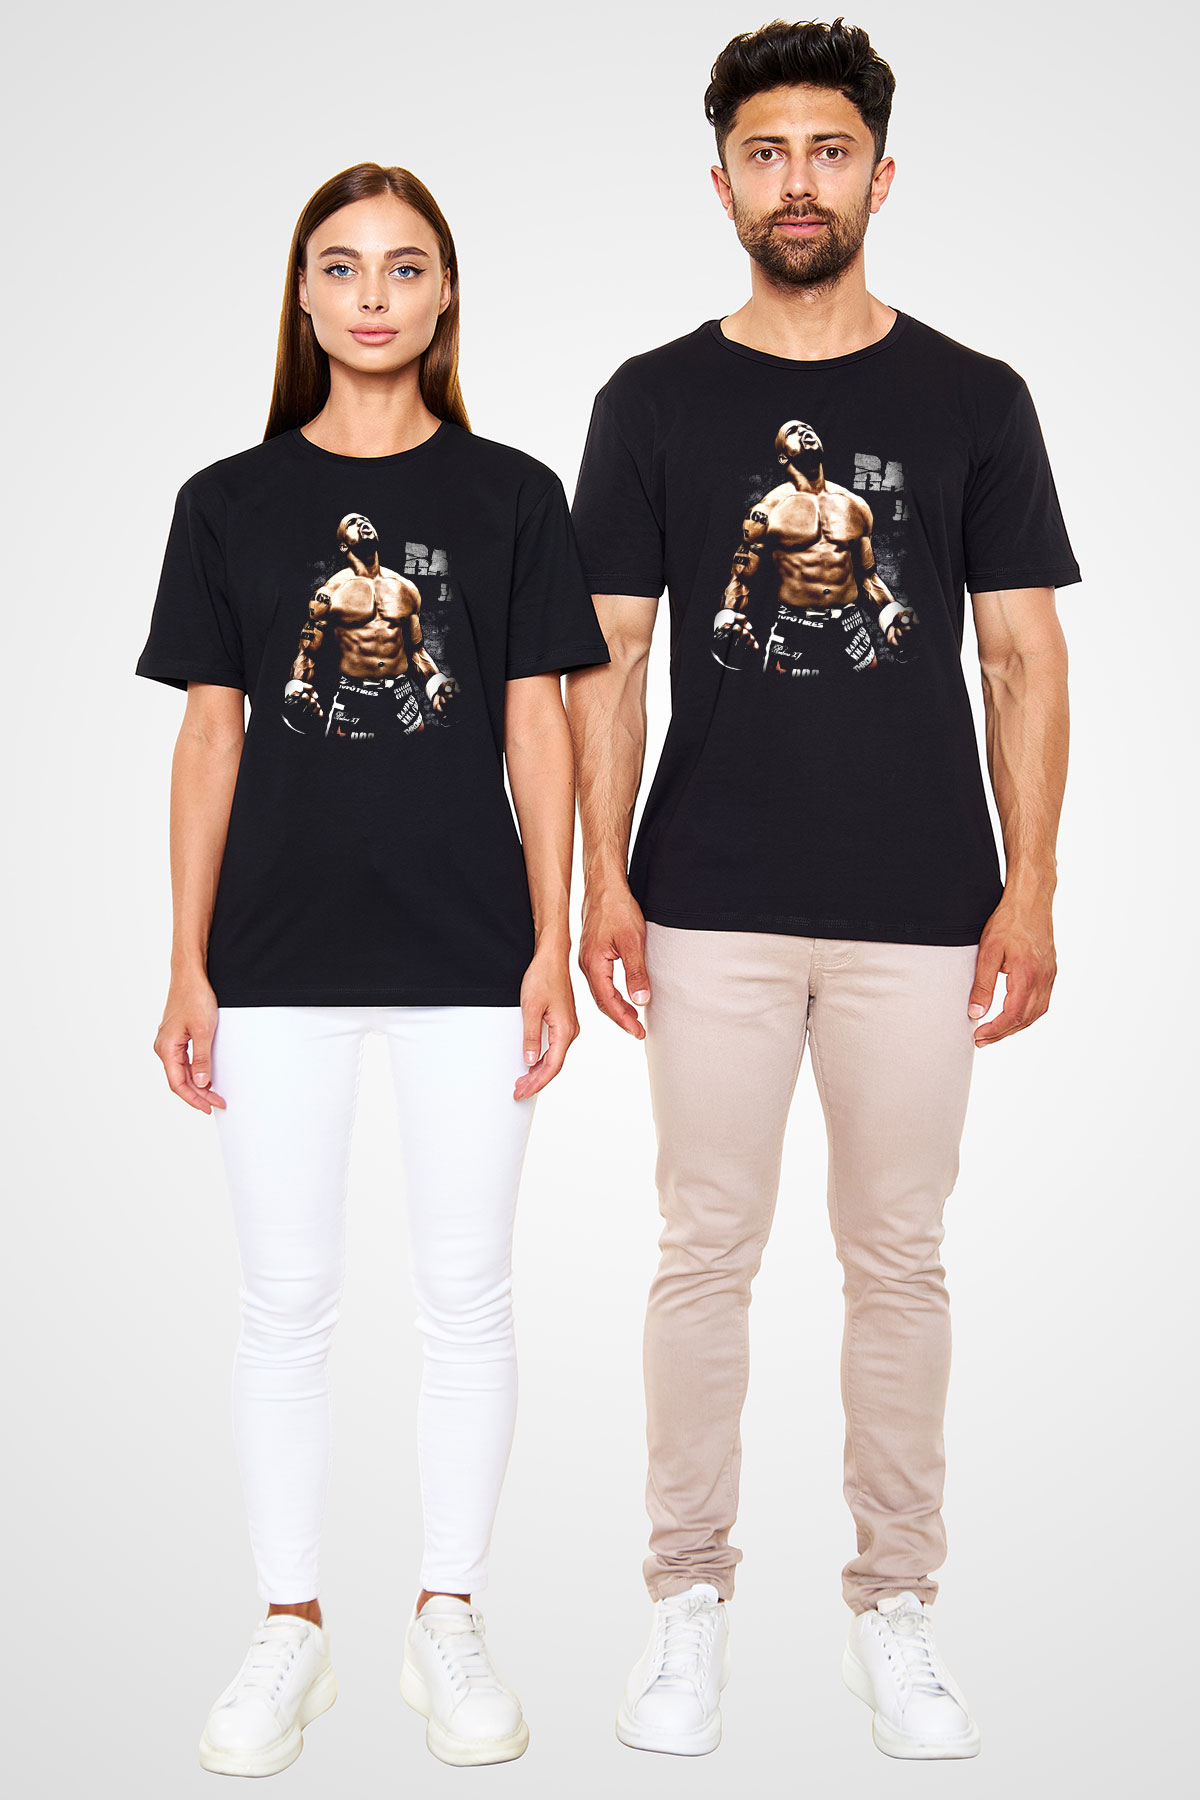 Karma dövüş sanatları Siyah Unisex Tişört - T-Shirt | Tişört Fabrikası